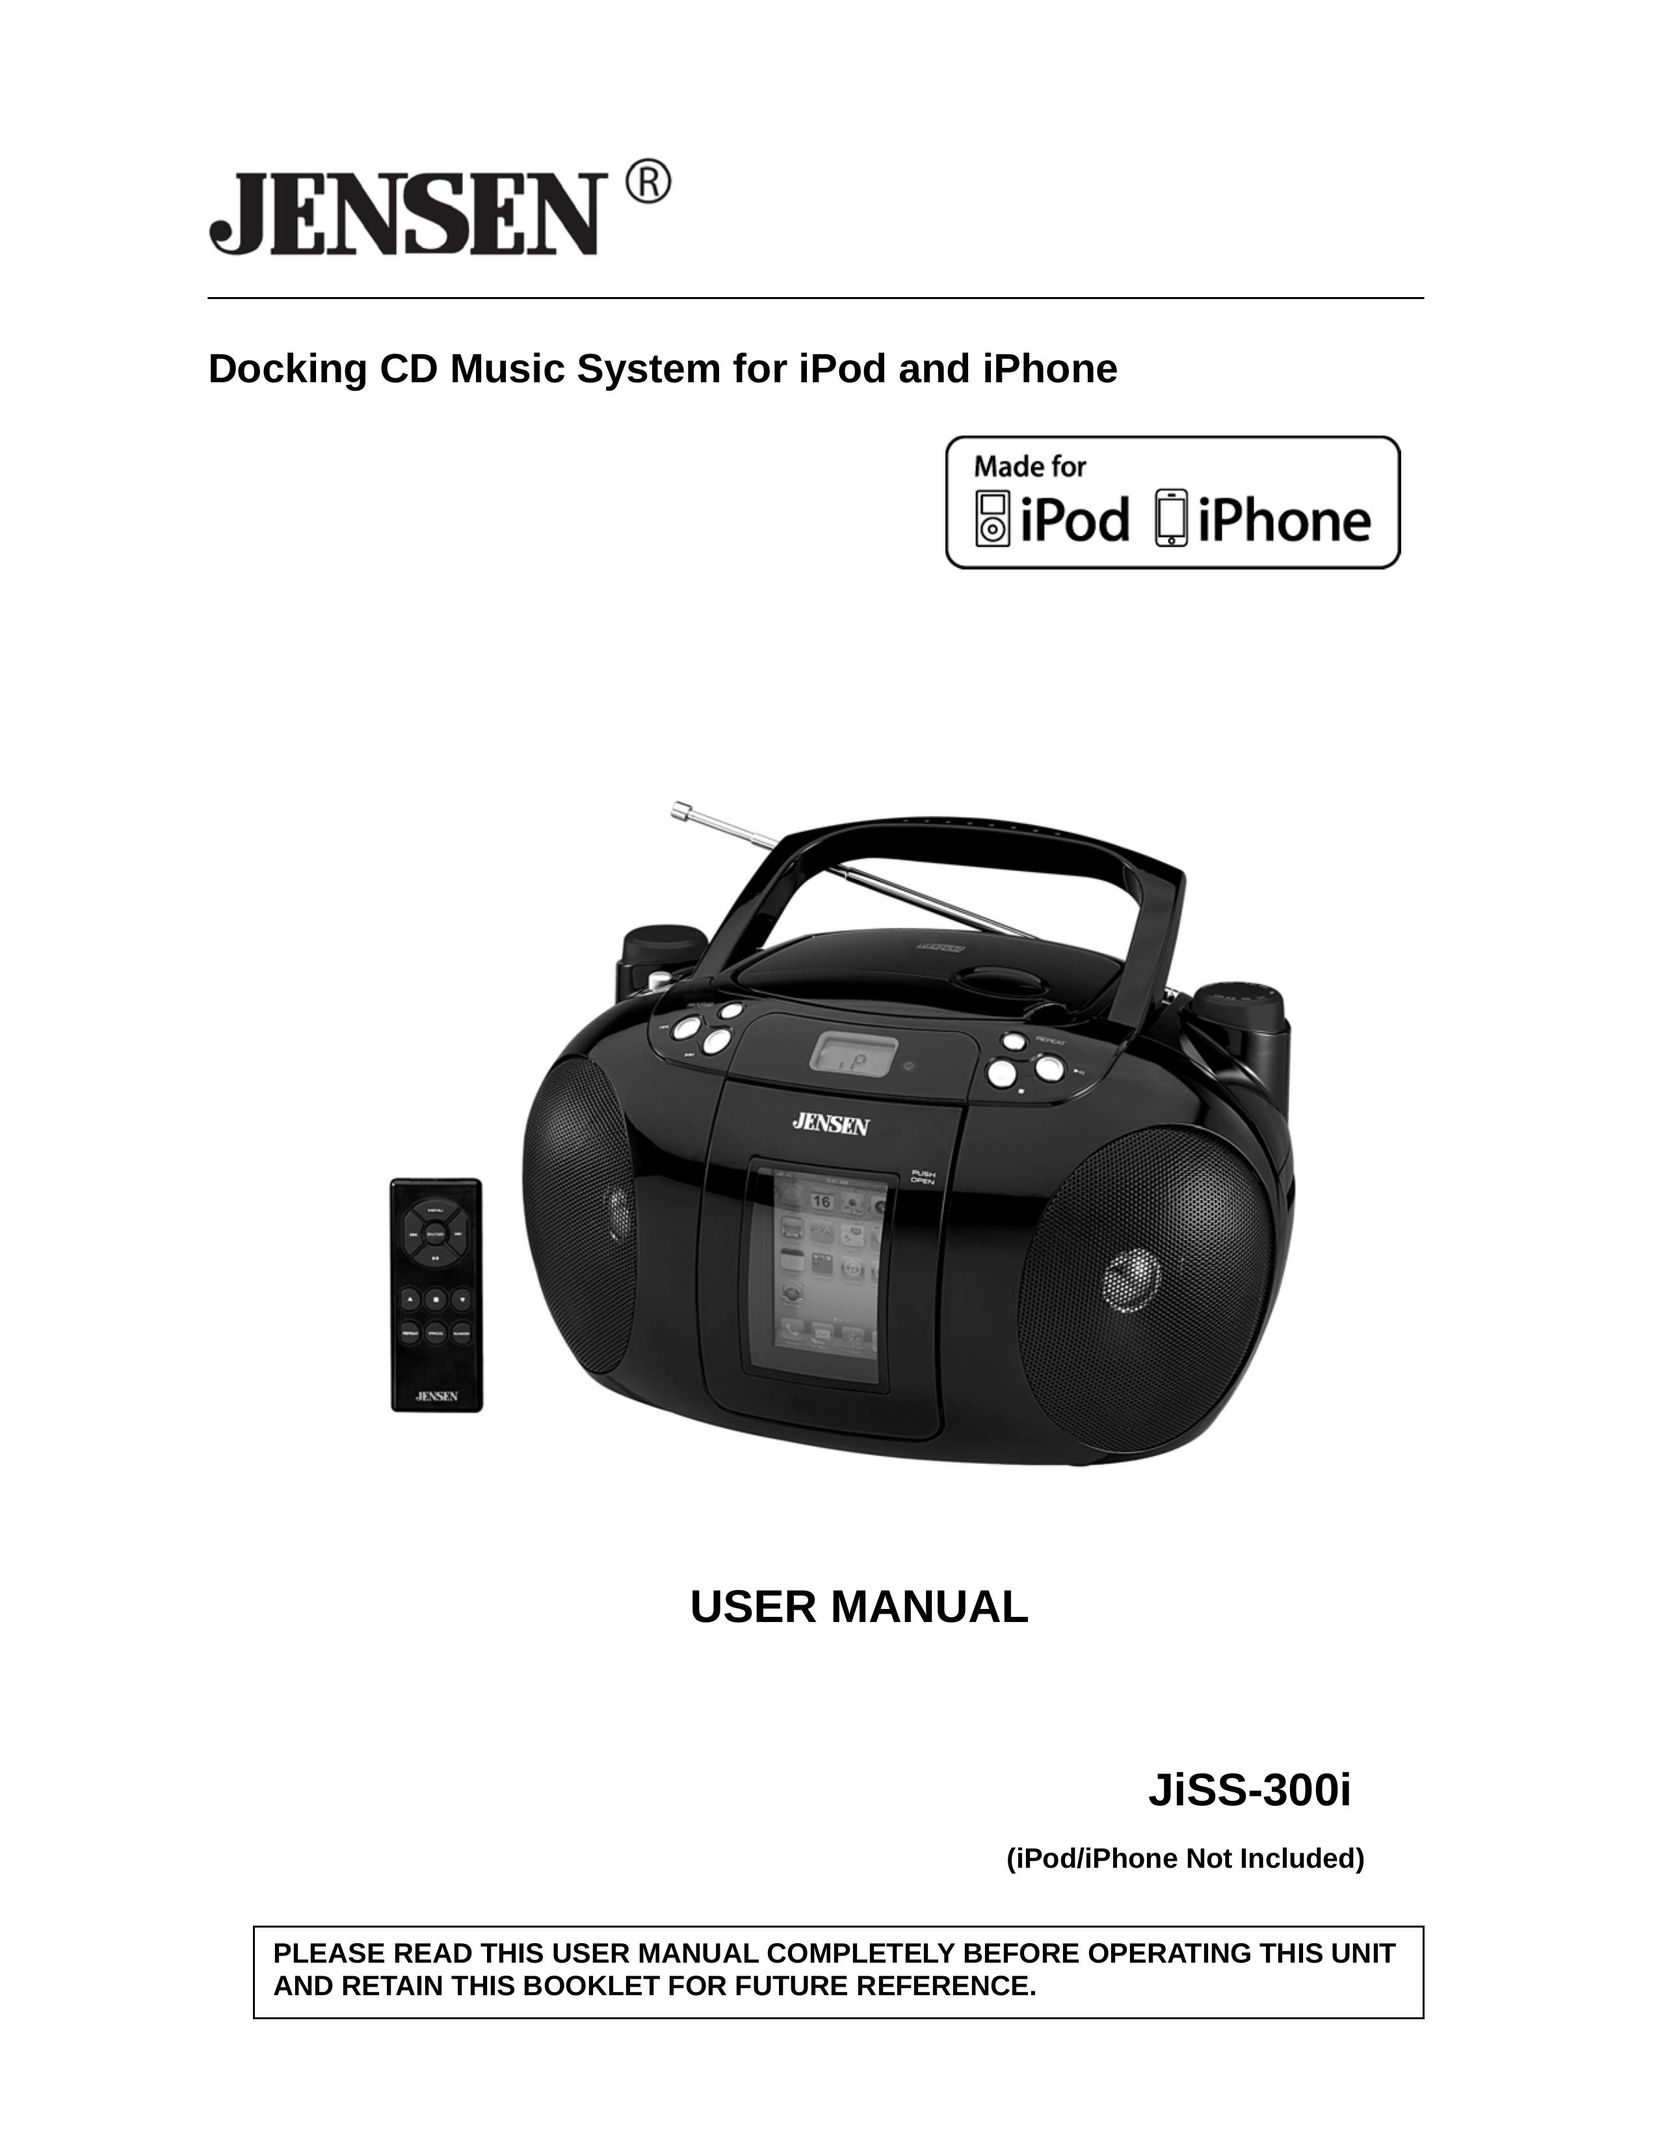 Jensen JISS-300I MP3 Docking Station User Manual